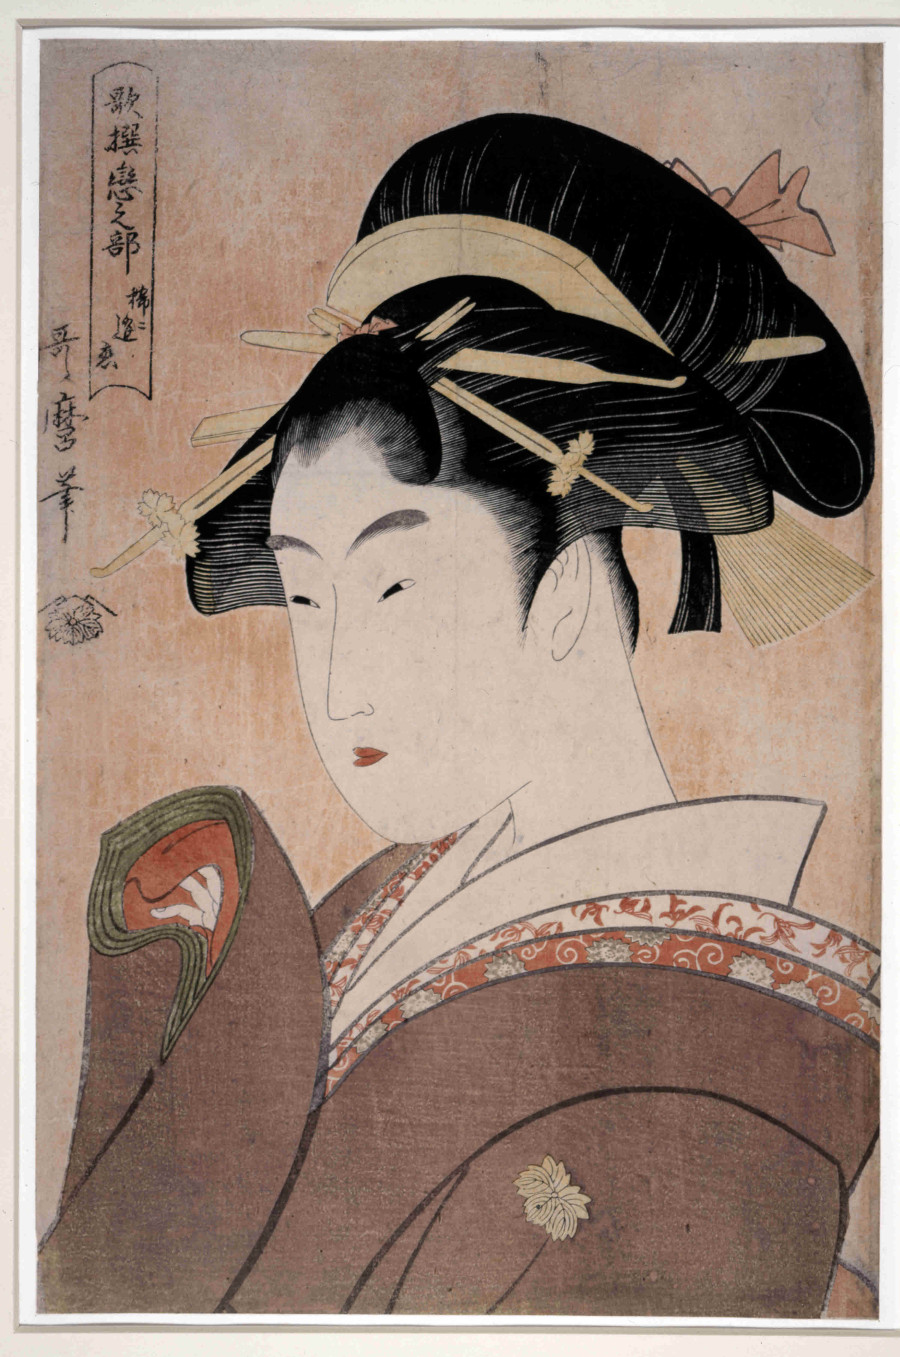 Shunga erotic art in Japan 春画 洋書 新品 - 本